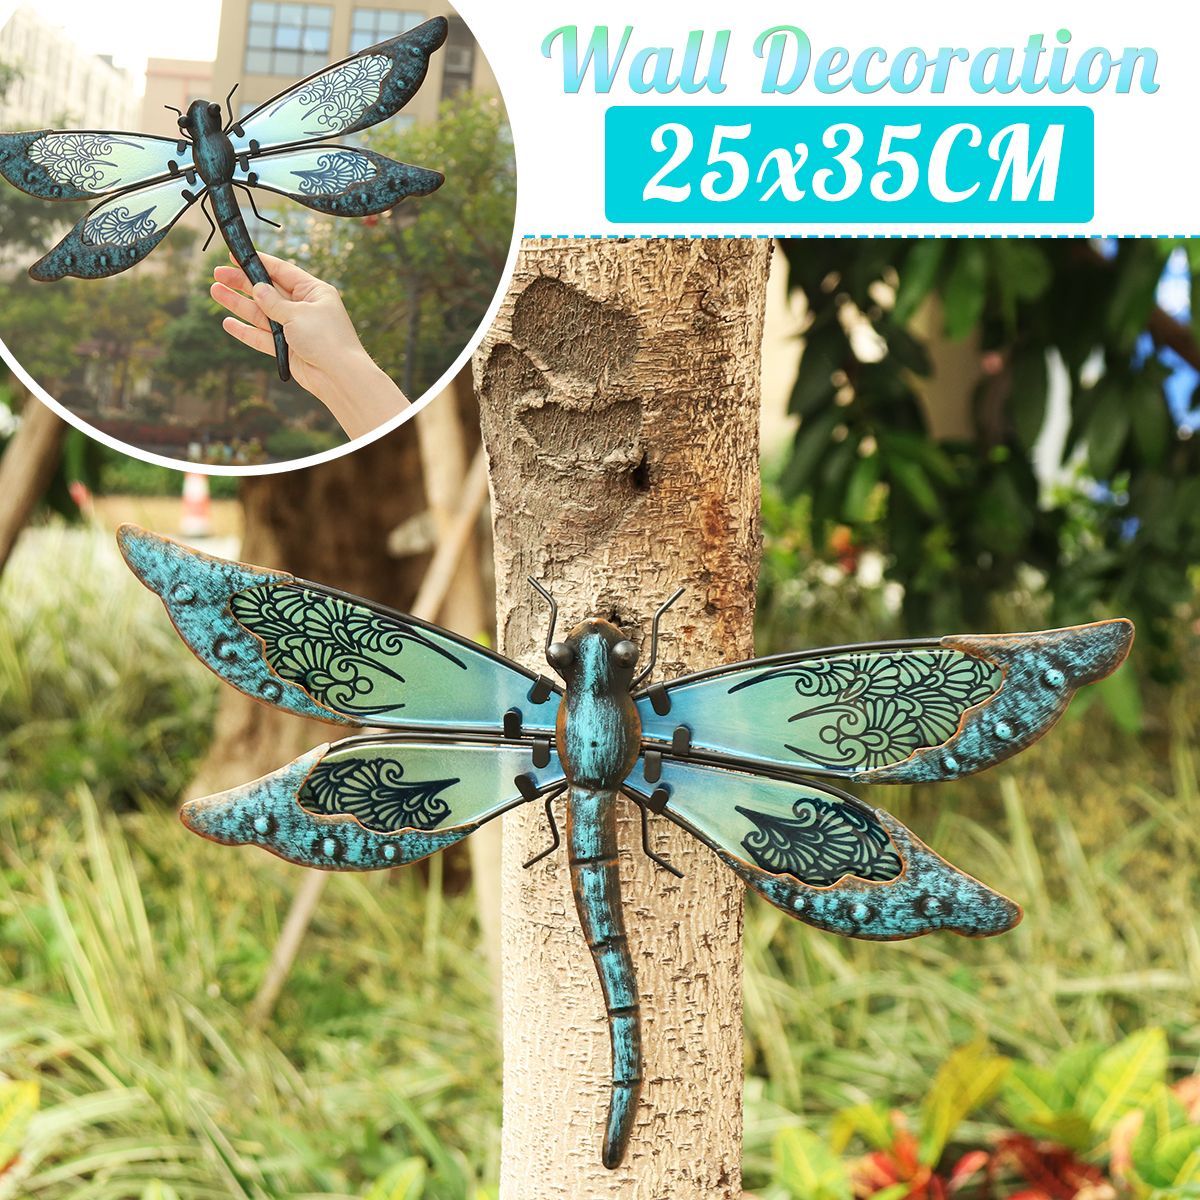 Metal-Dragonfly-Wall-Artwork-for-Garden-Decoration-Miniaturas-Animal-Outdoor-1702925